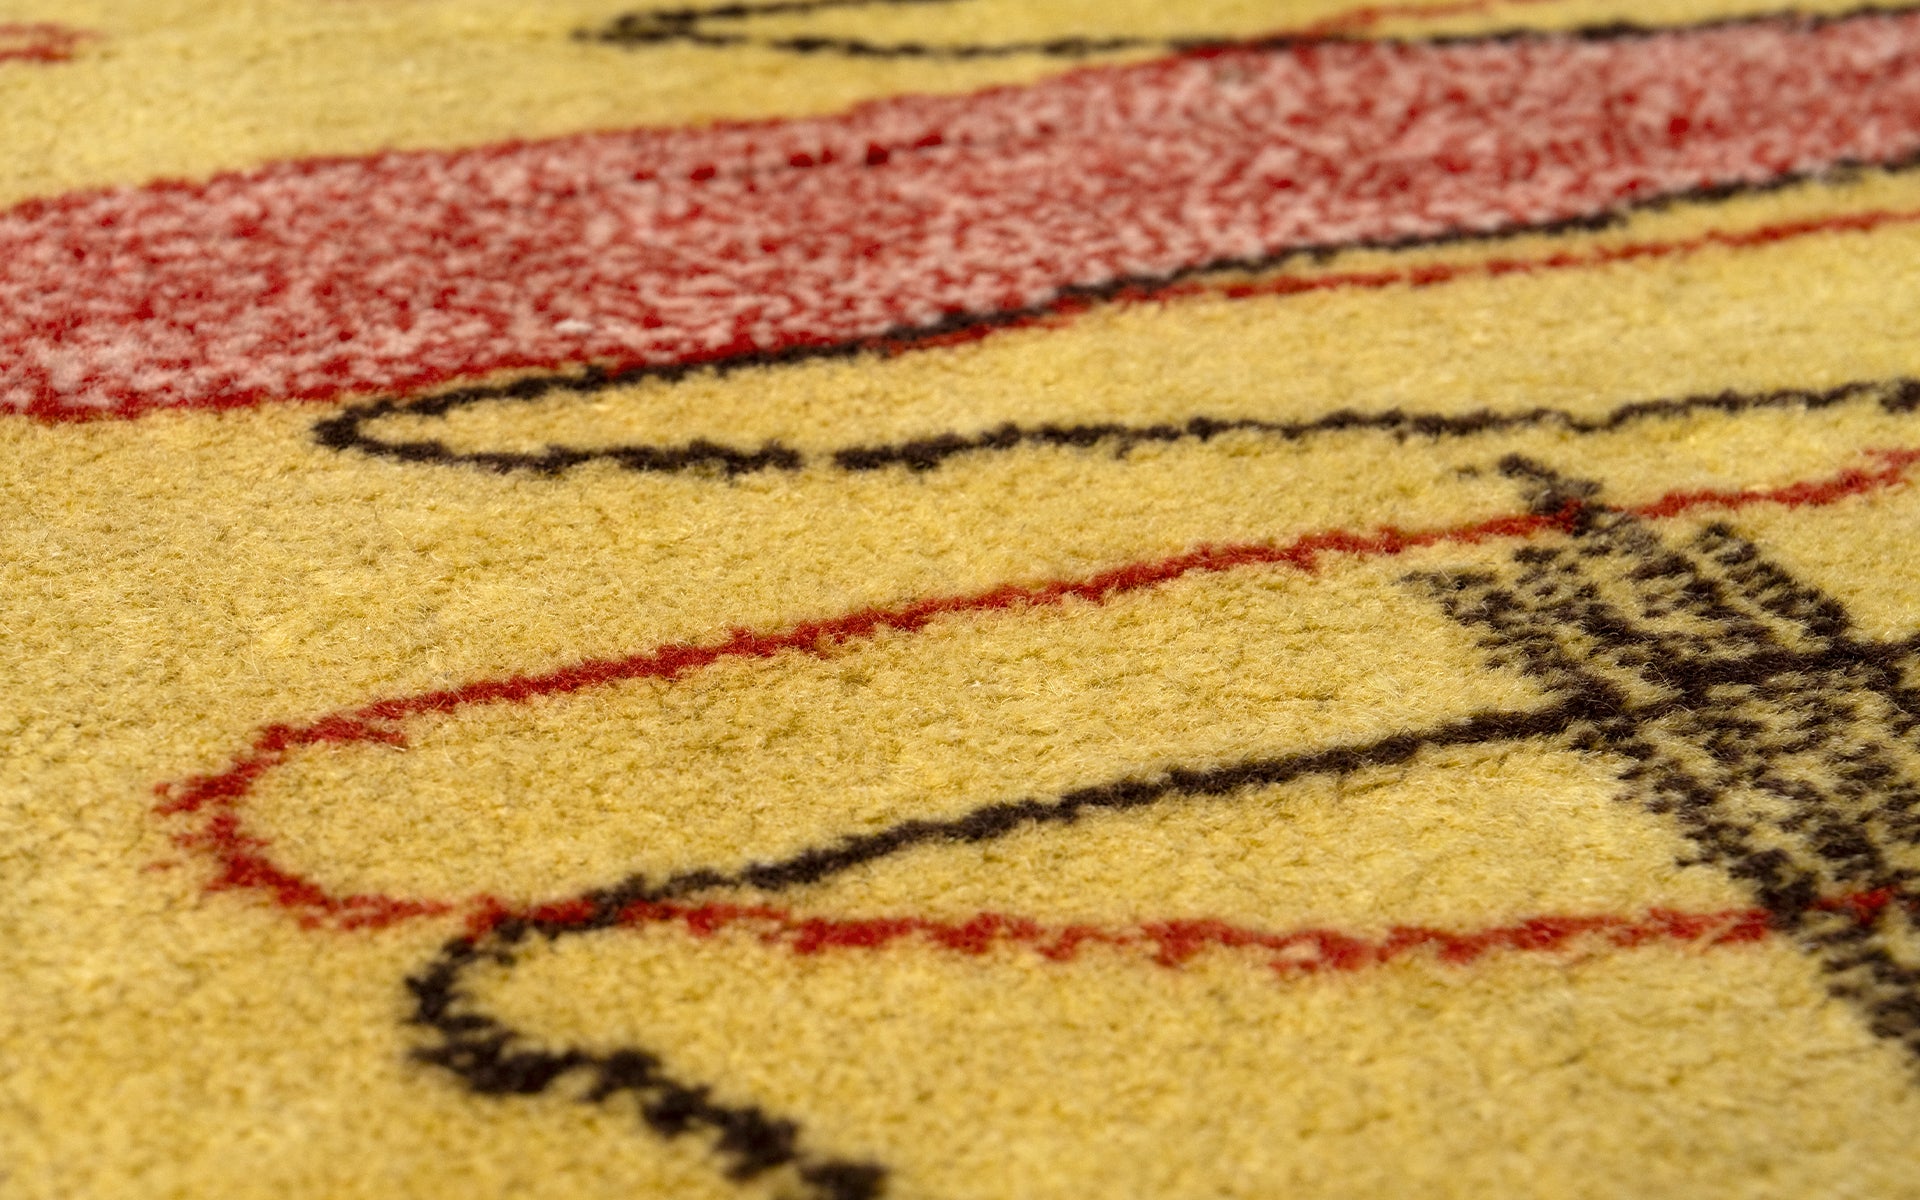 Carrot Patterned Carpet